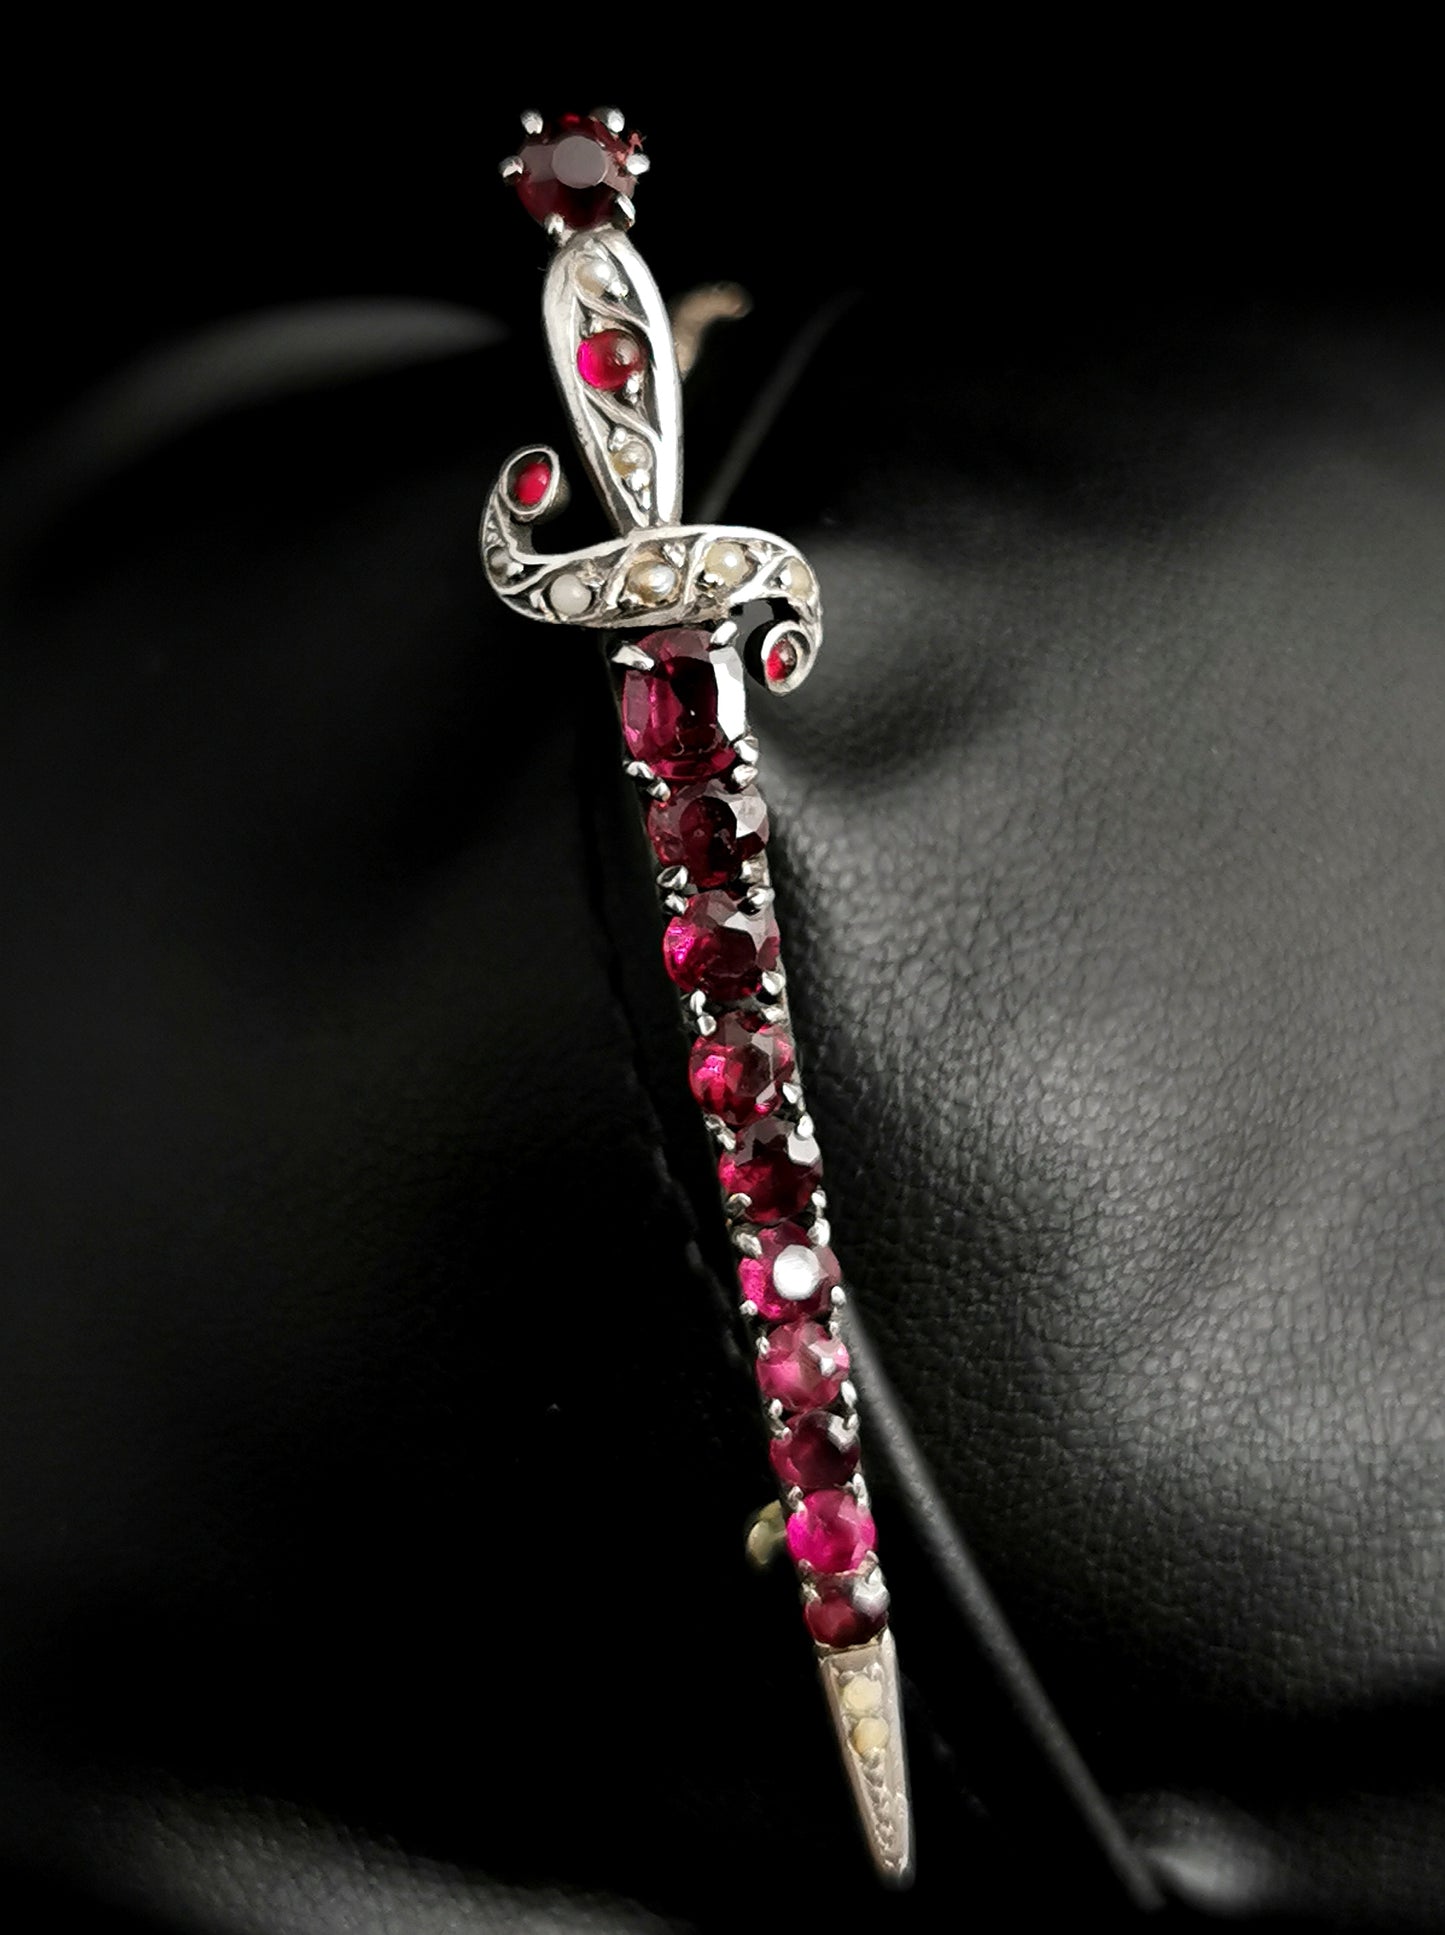 Antique French Garnet sword brooch, silver, 19th century